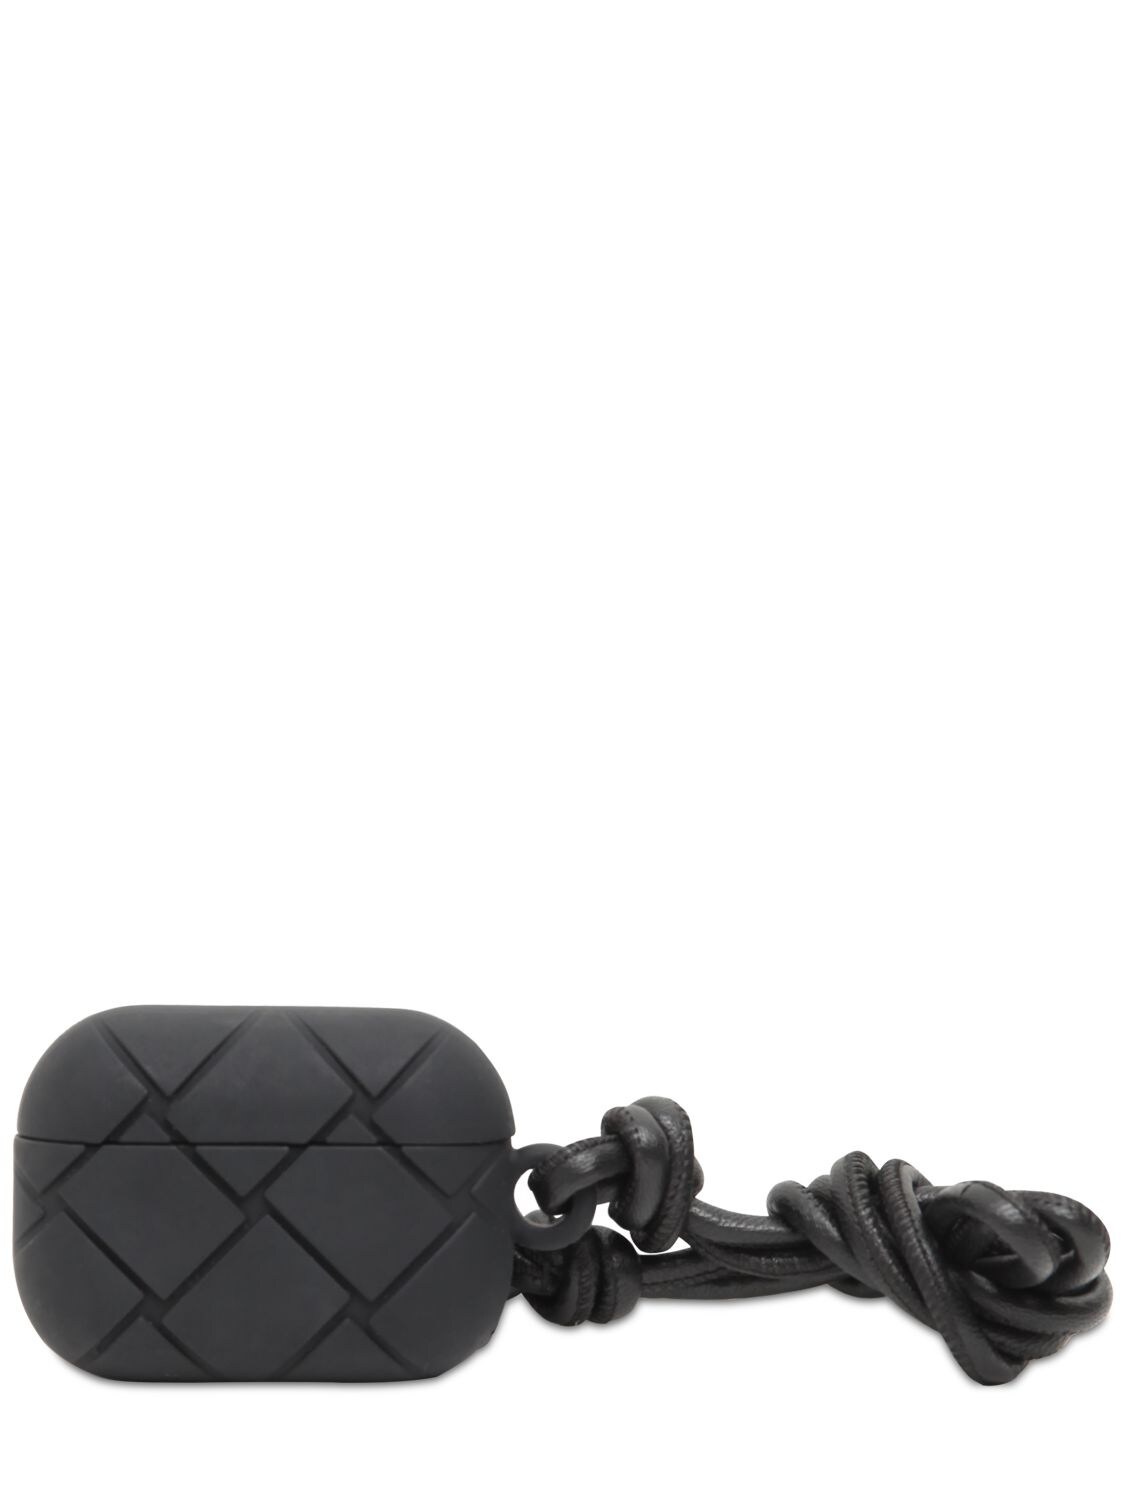 Bottega Veneta Leather & Silicone Airpods Pro Case In Black